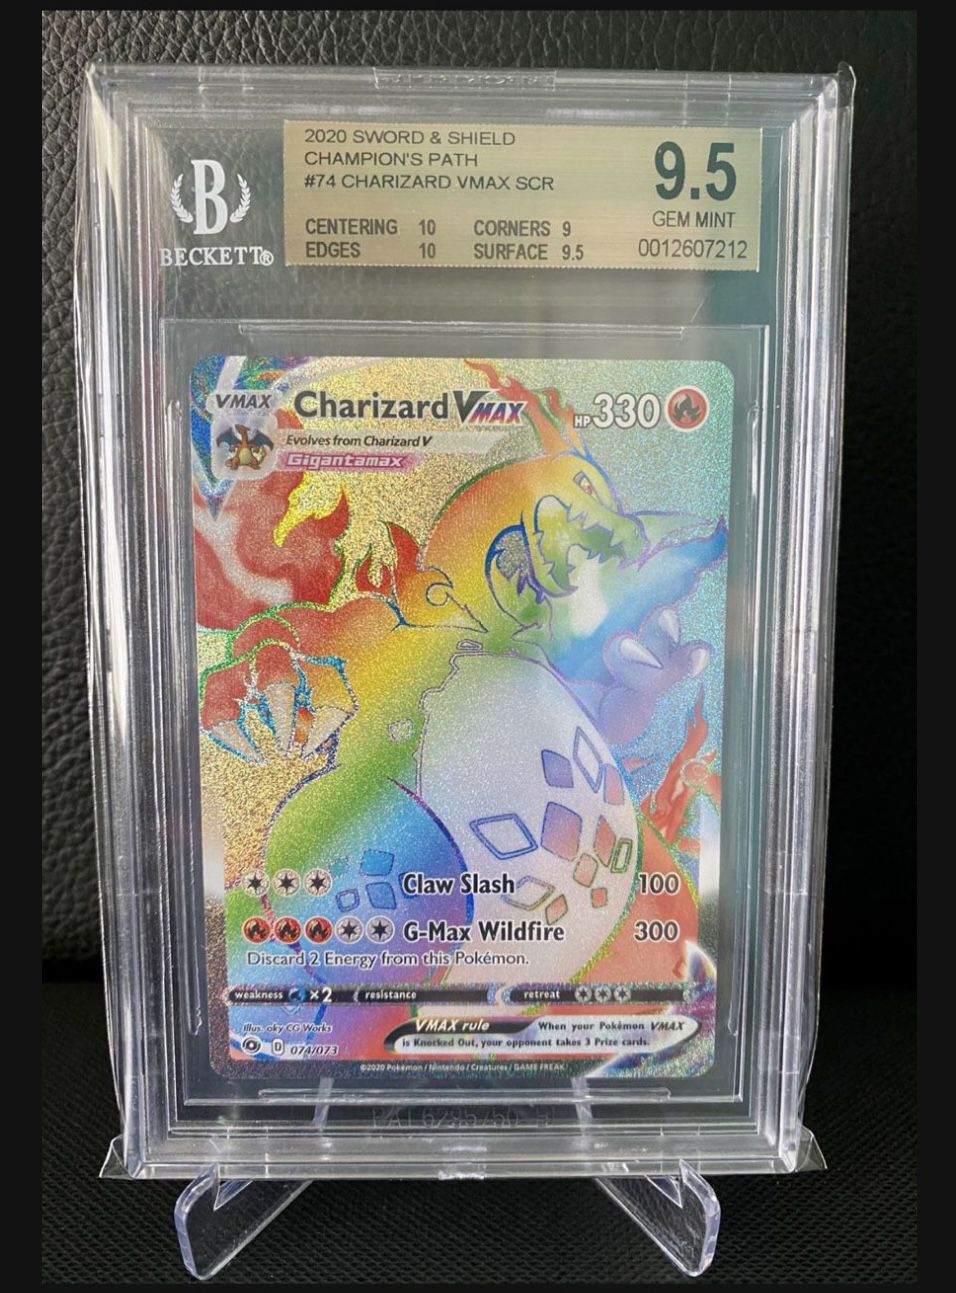 Pokémon 2020 Champions Path Charizard Vmax Rainbow Rare #074/073 Card!!! GRADED GEM MINT 9.5 BGS!!!🔥🔥🔥